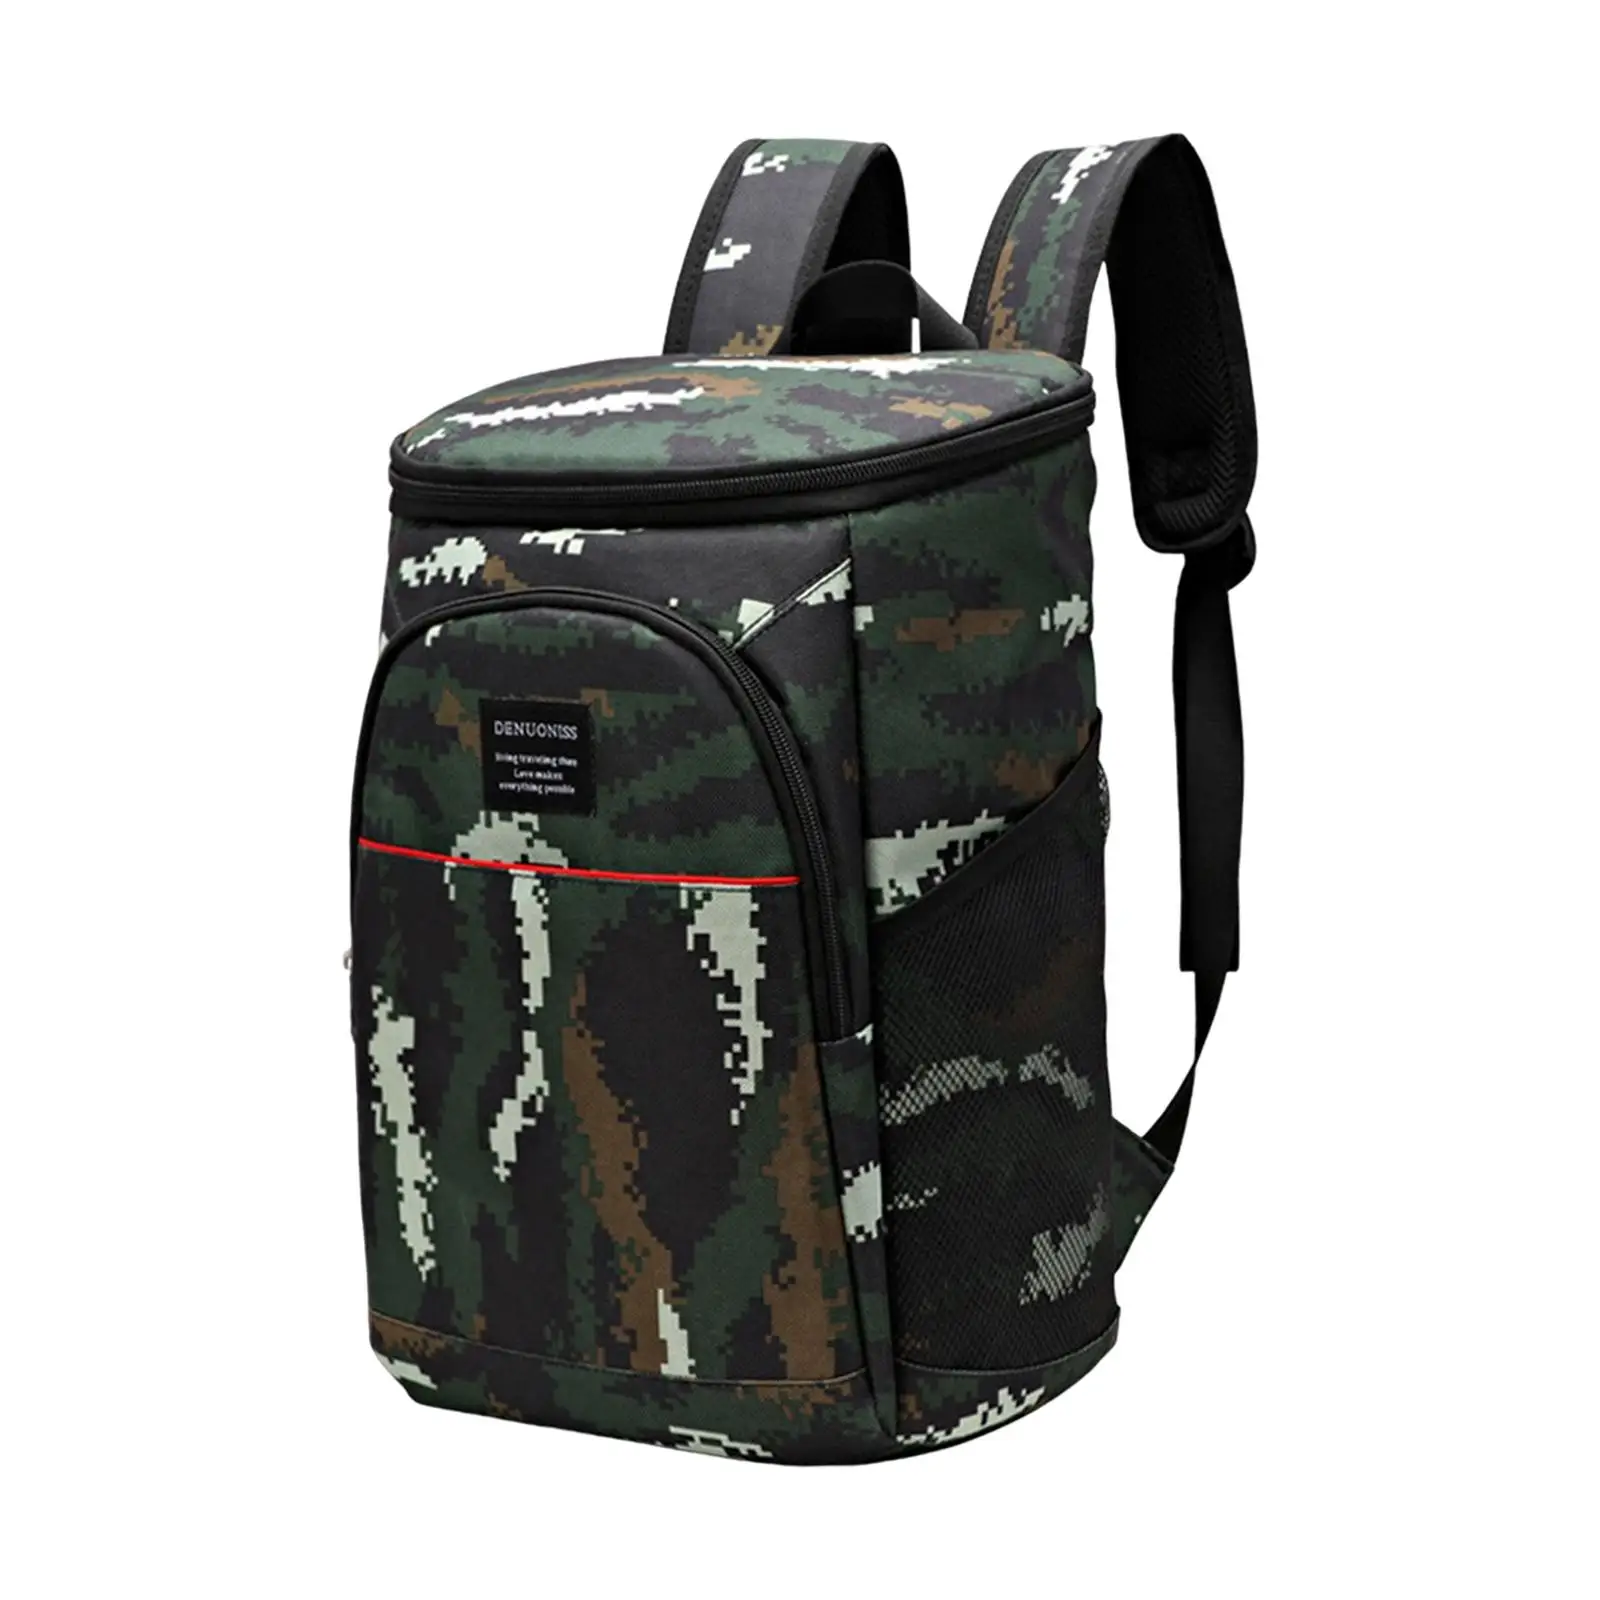 Backpack Cooler Lightweight Insulated Cooler Bag for Picnic Hiking Travel